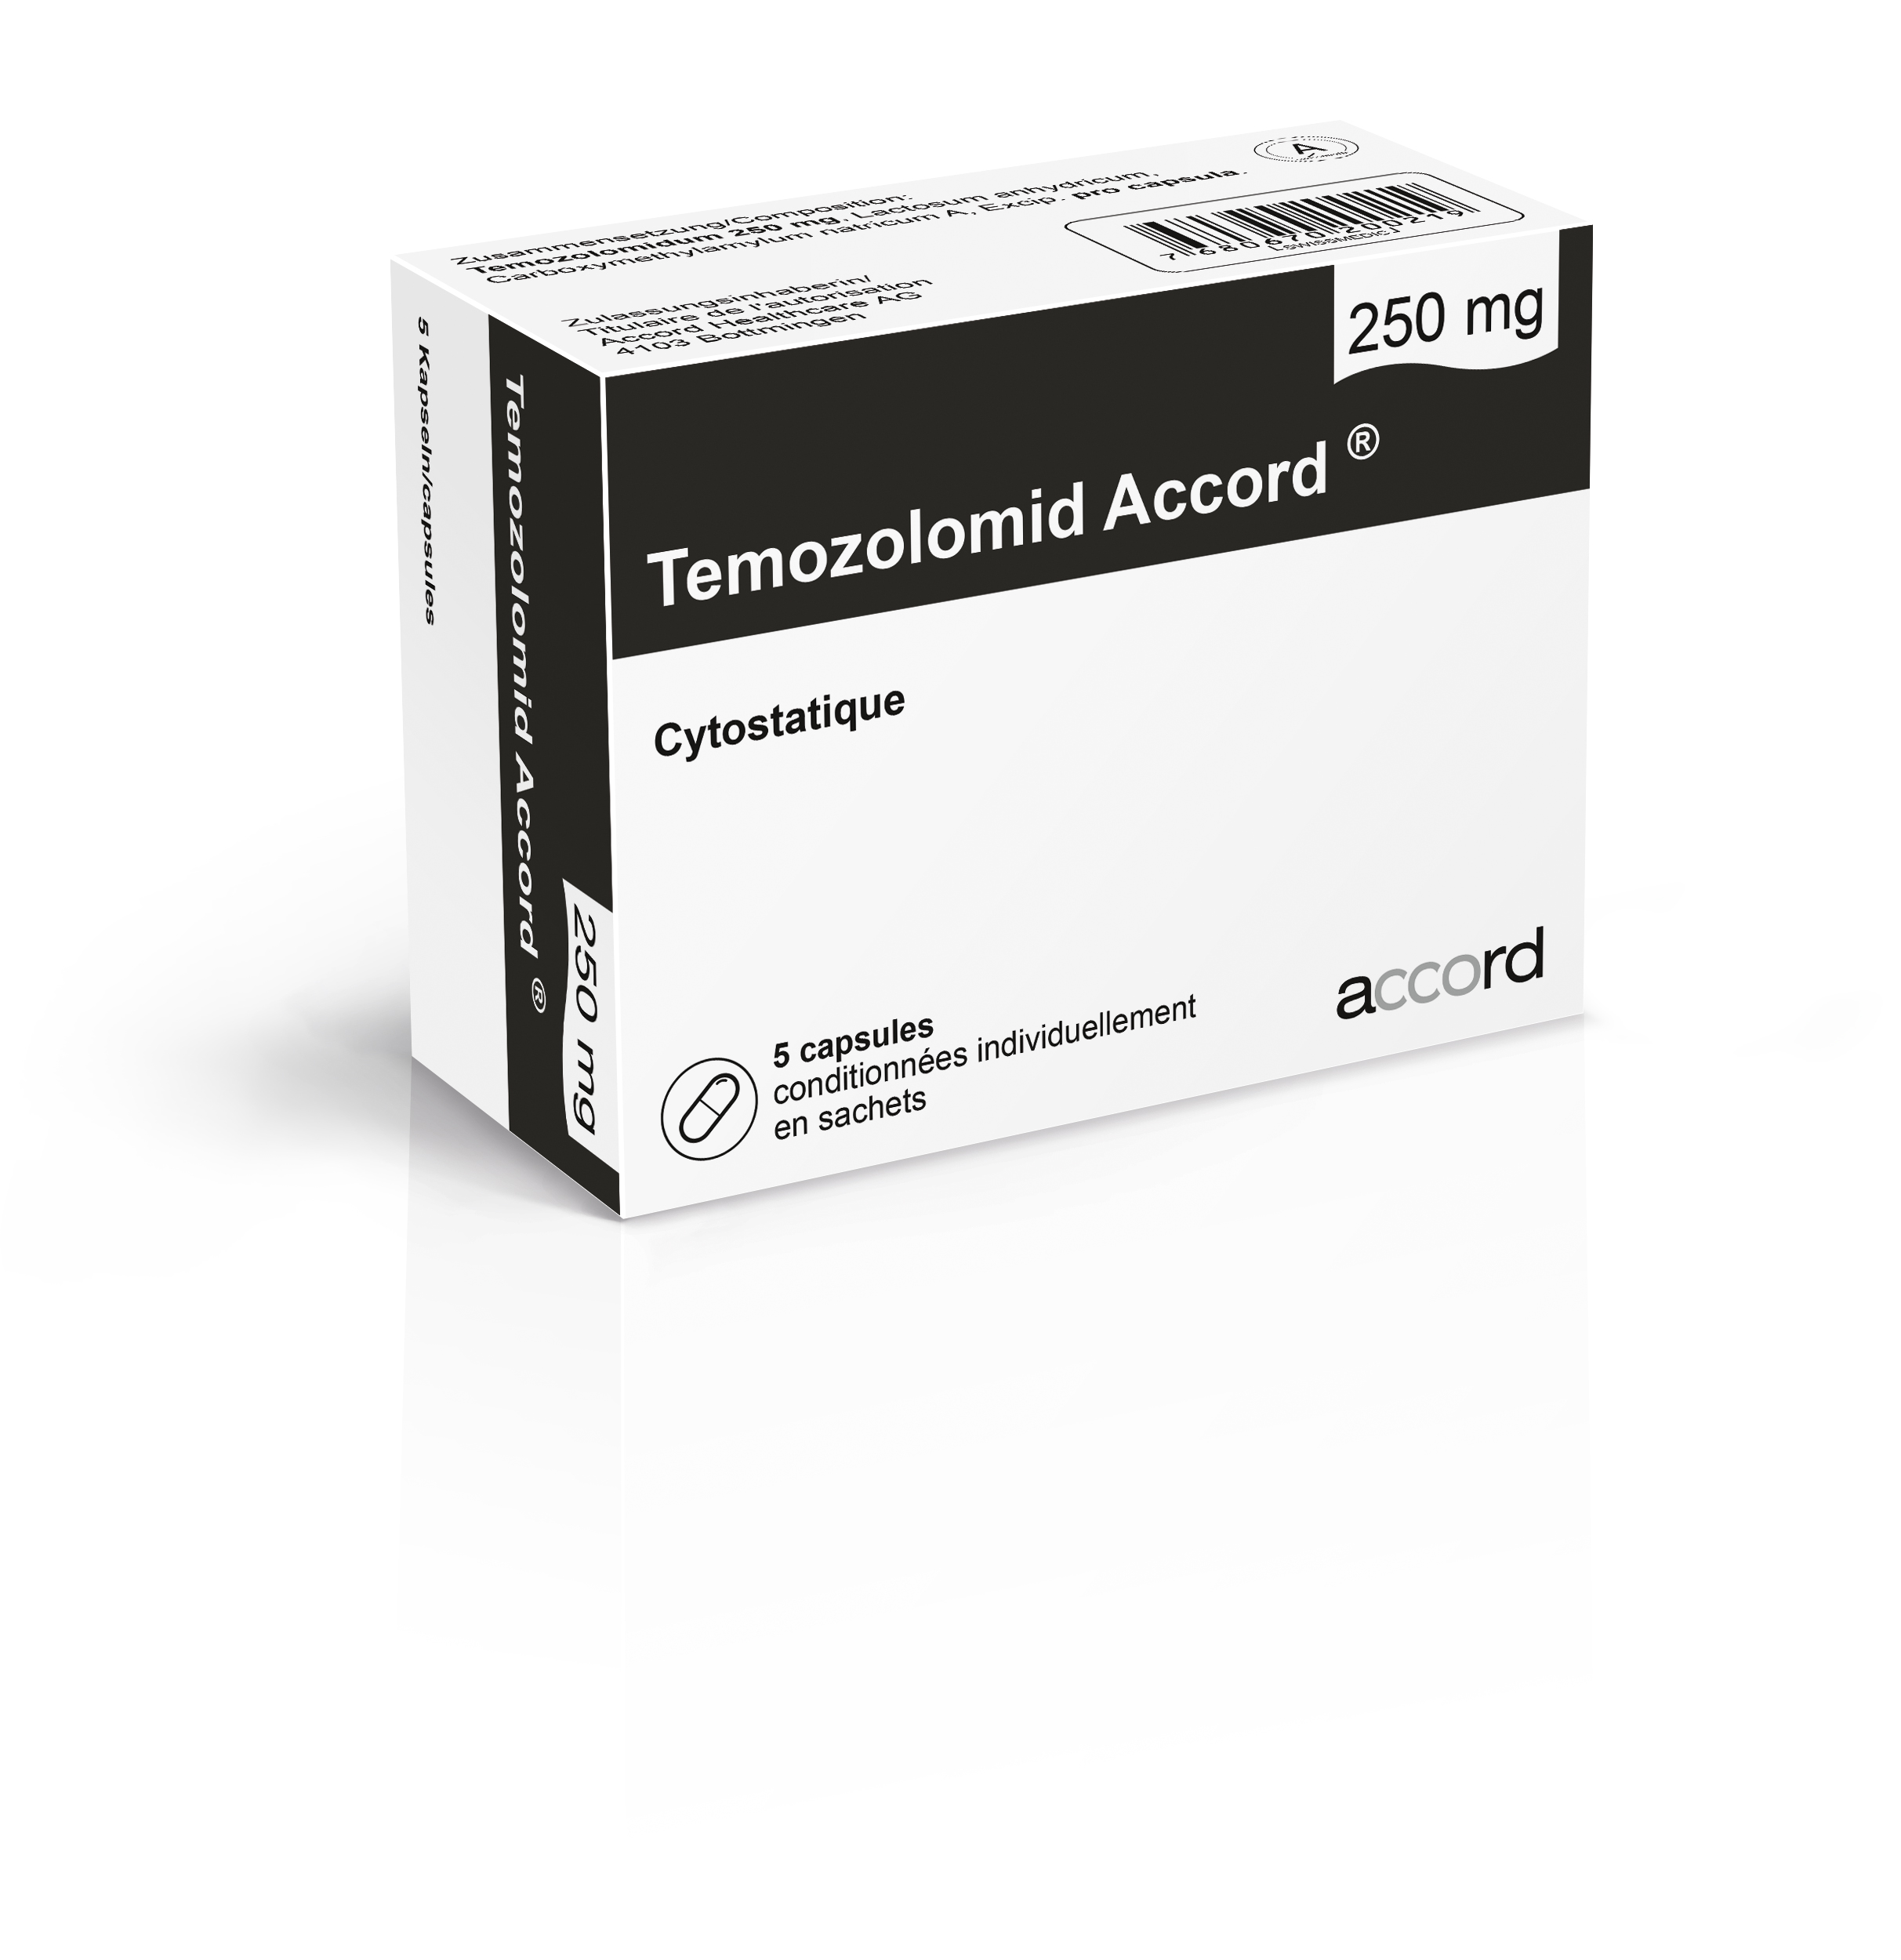 Temozolomid Accord® 250 mg